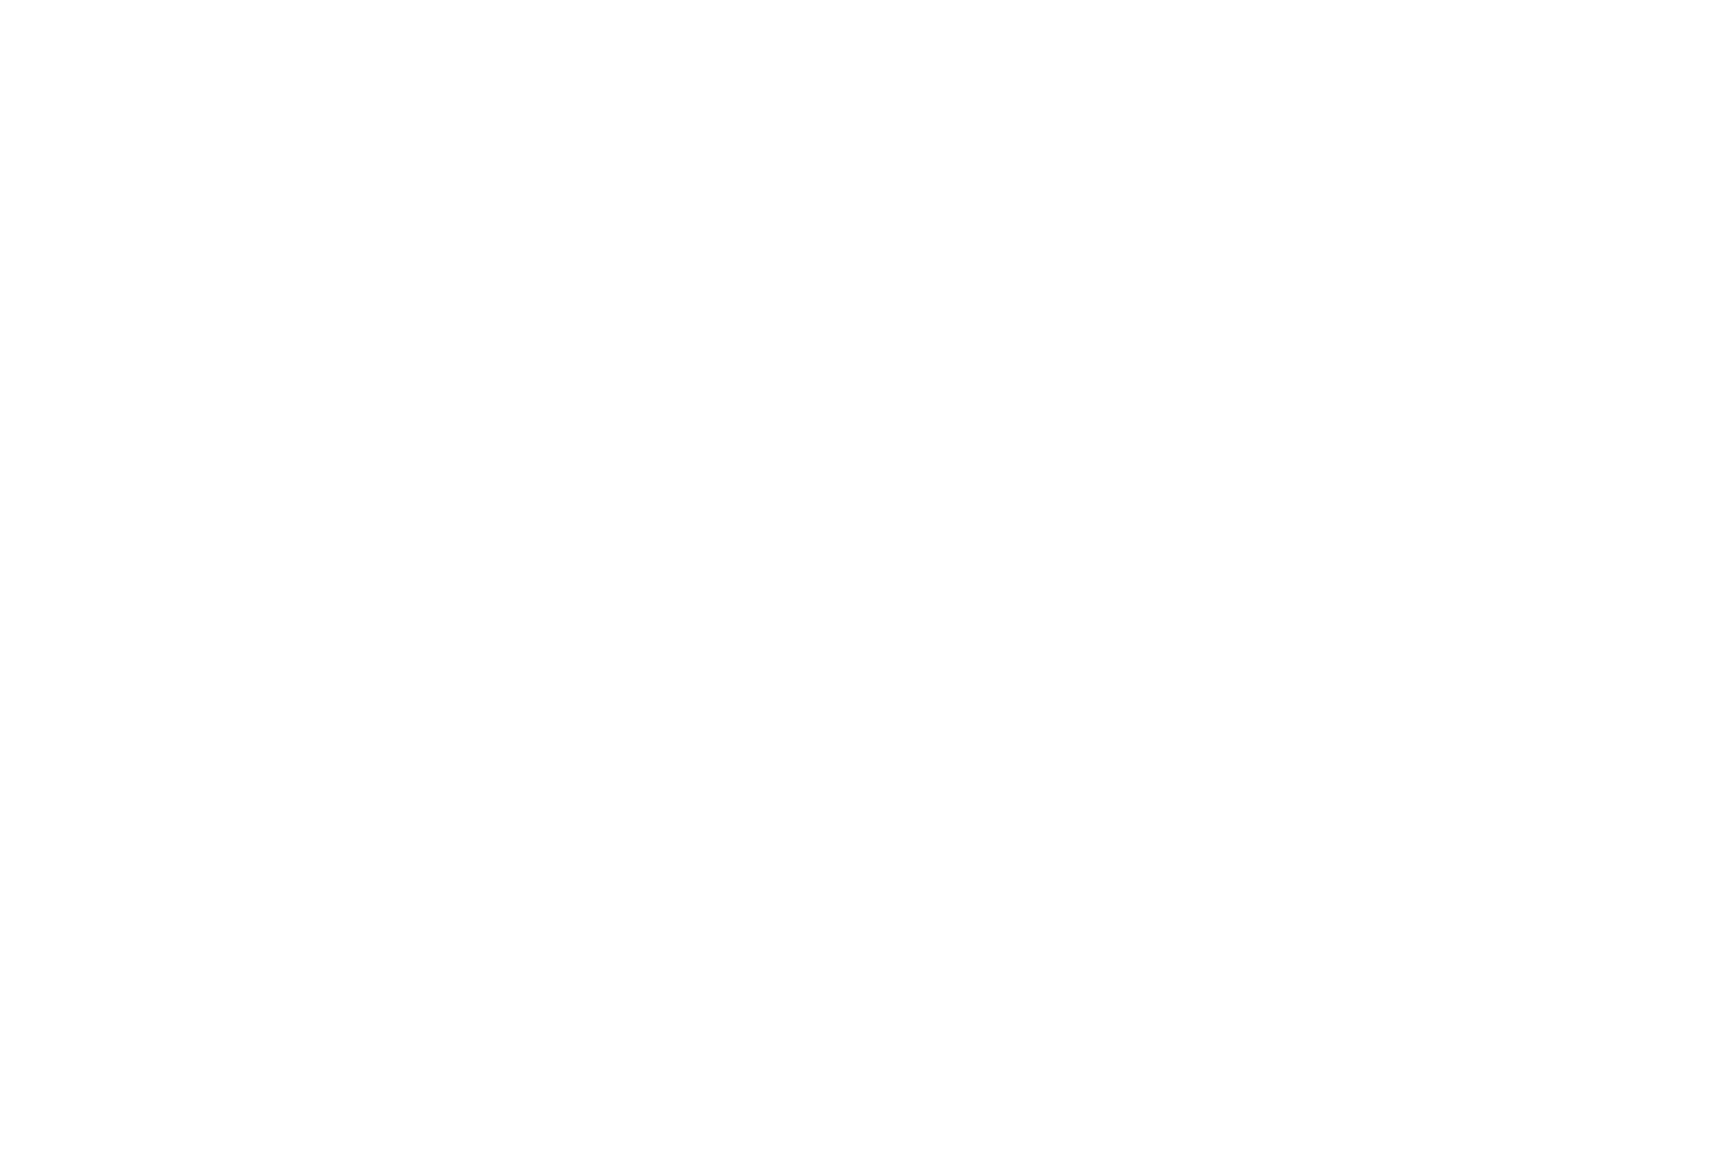 Nominee - 18th Annual ReelHeART International Film and Screenplay Festival - 2021 (1)